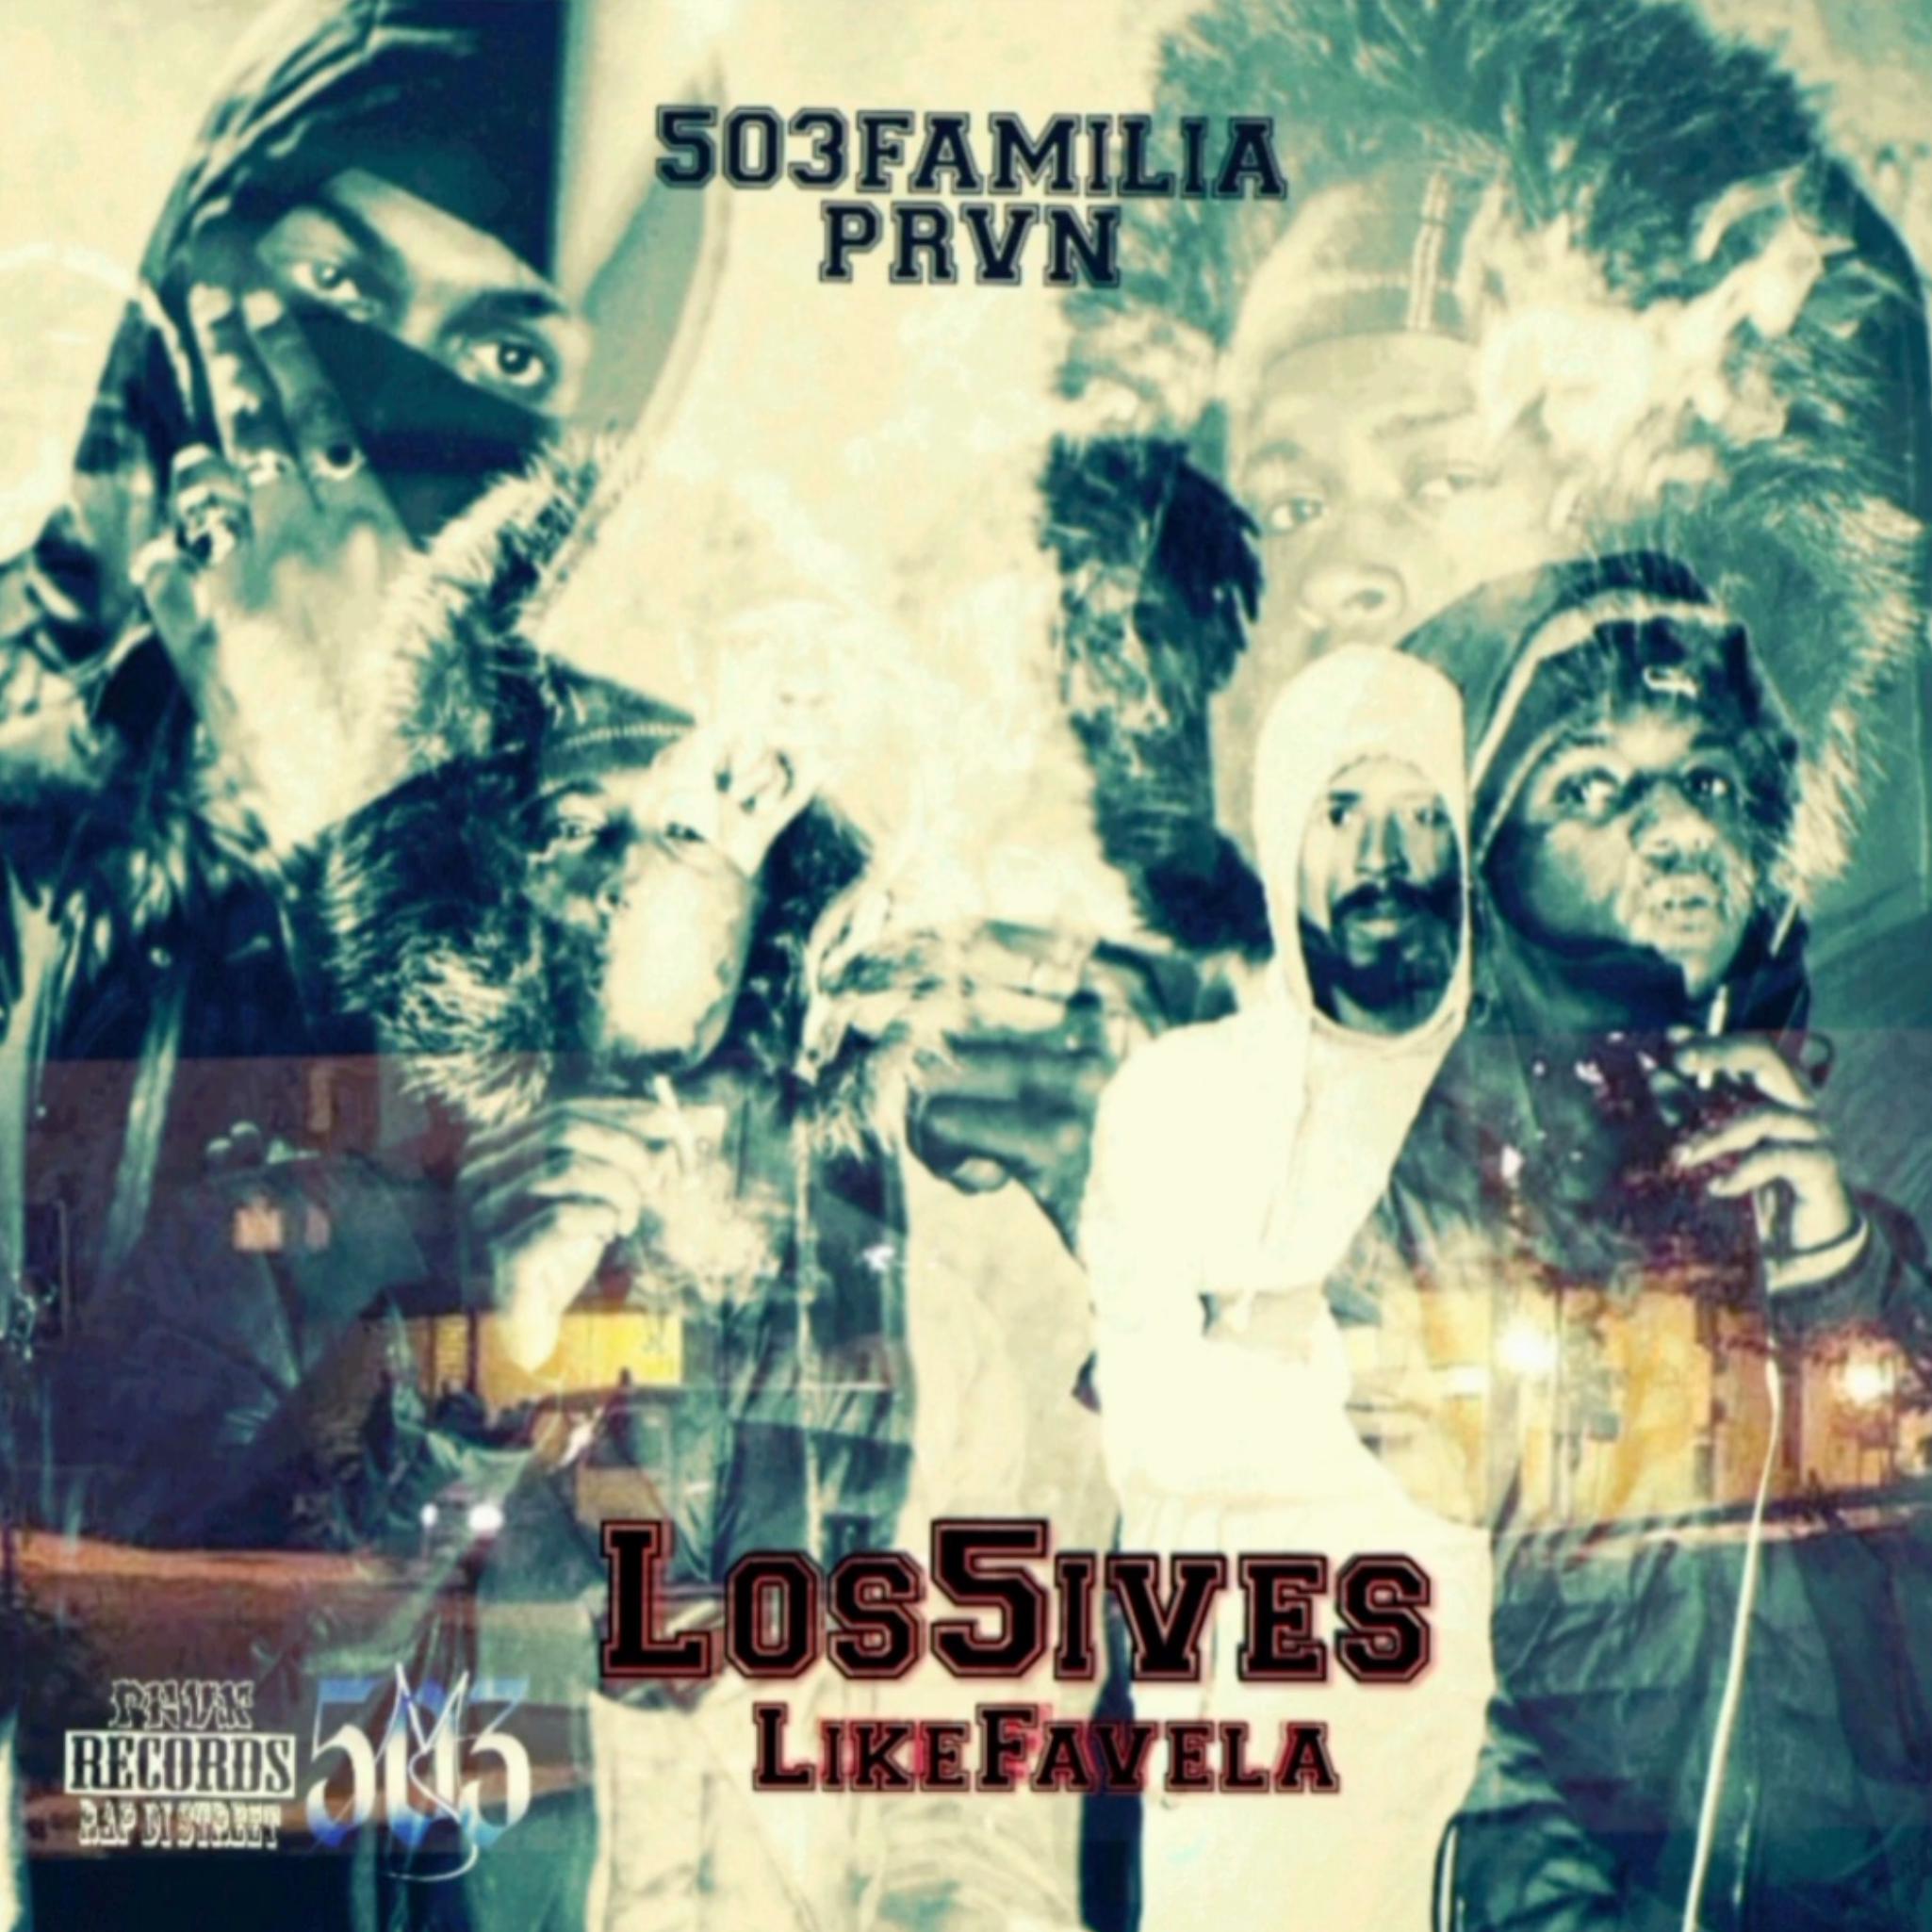 14 503 Família - mixtape LosFives - LikeFavela